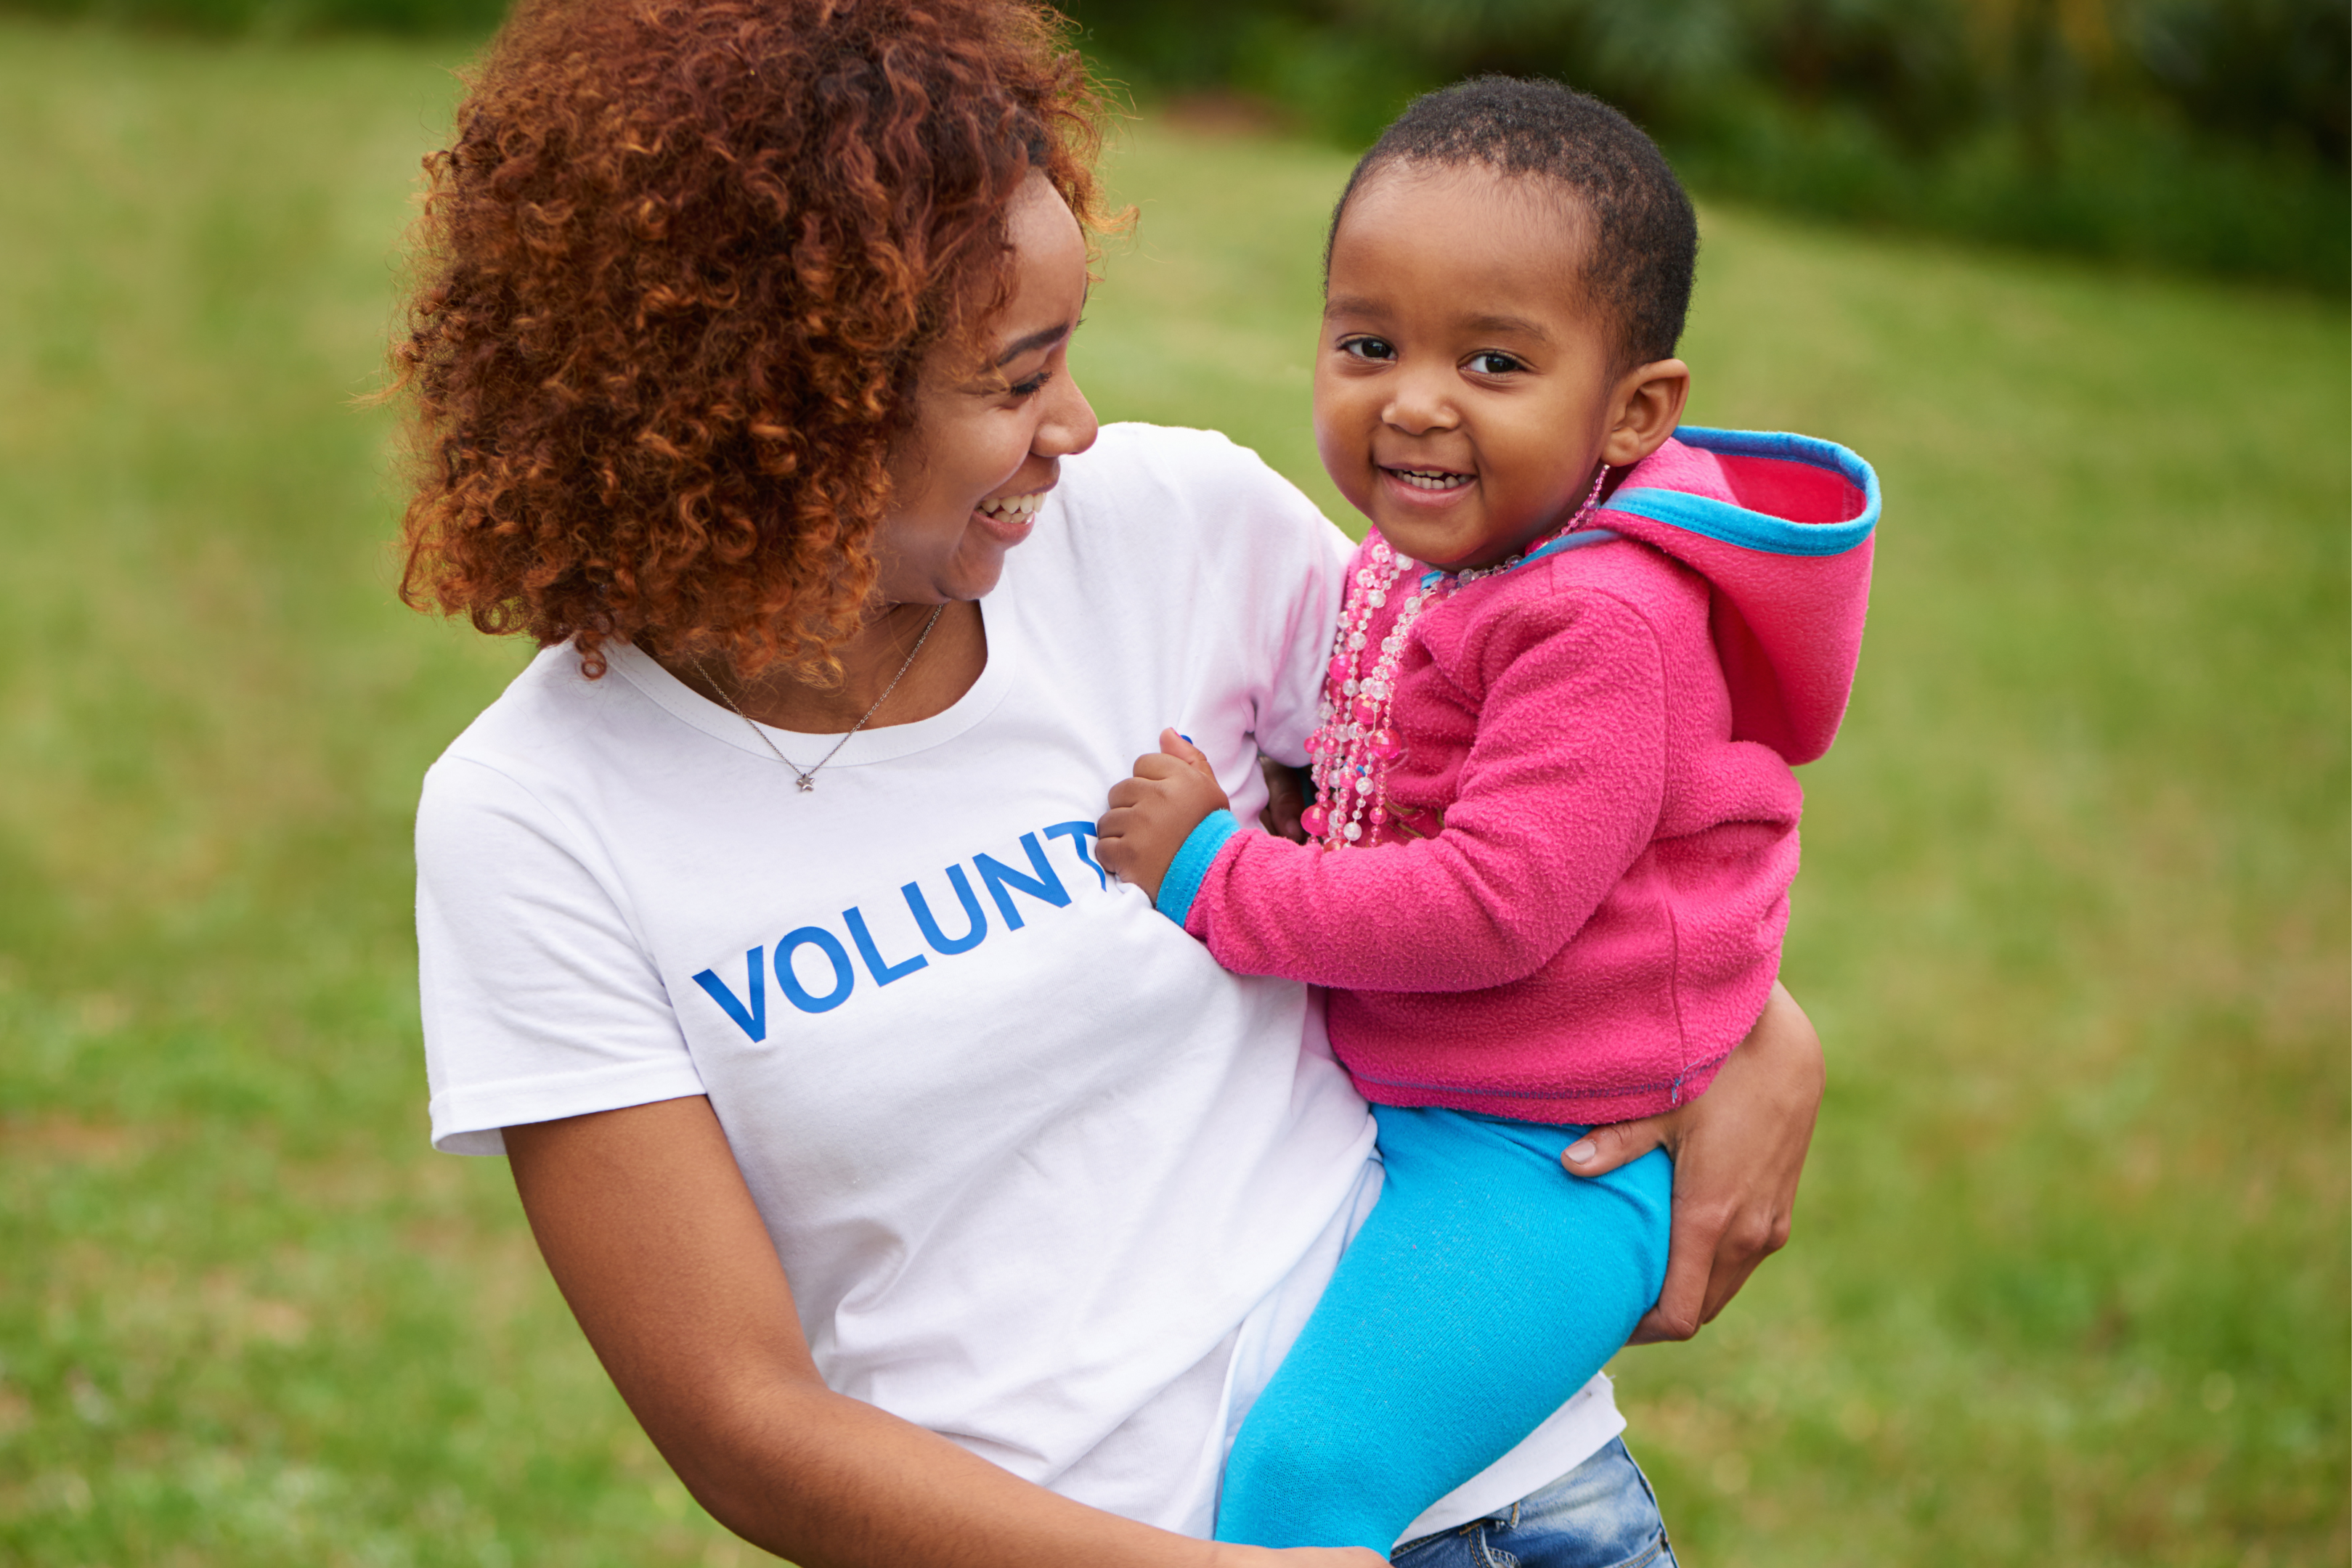 women in a volunteer shirt holding an infant